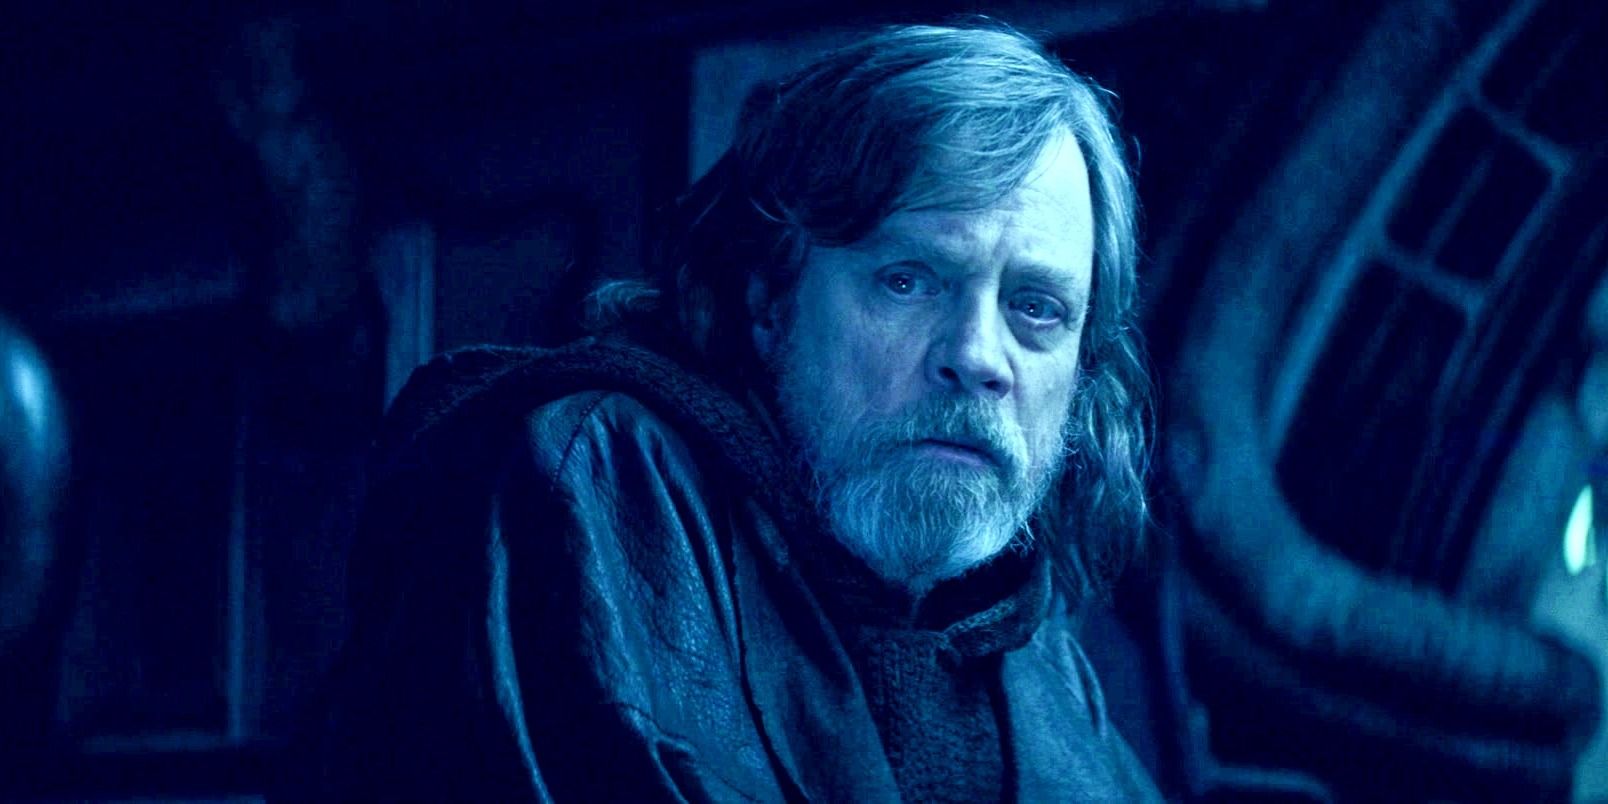 Luke Skywalker looking concerned in a blue hue in Star Wars: The Last Jedi.